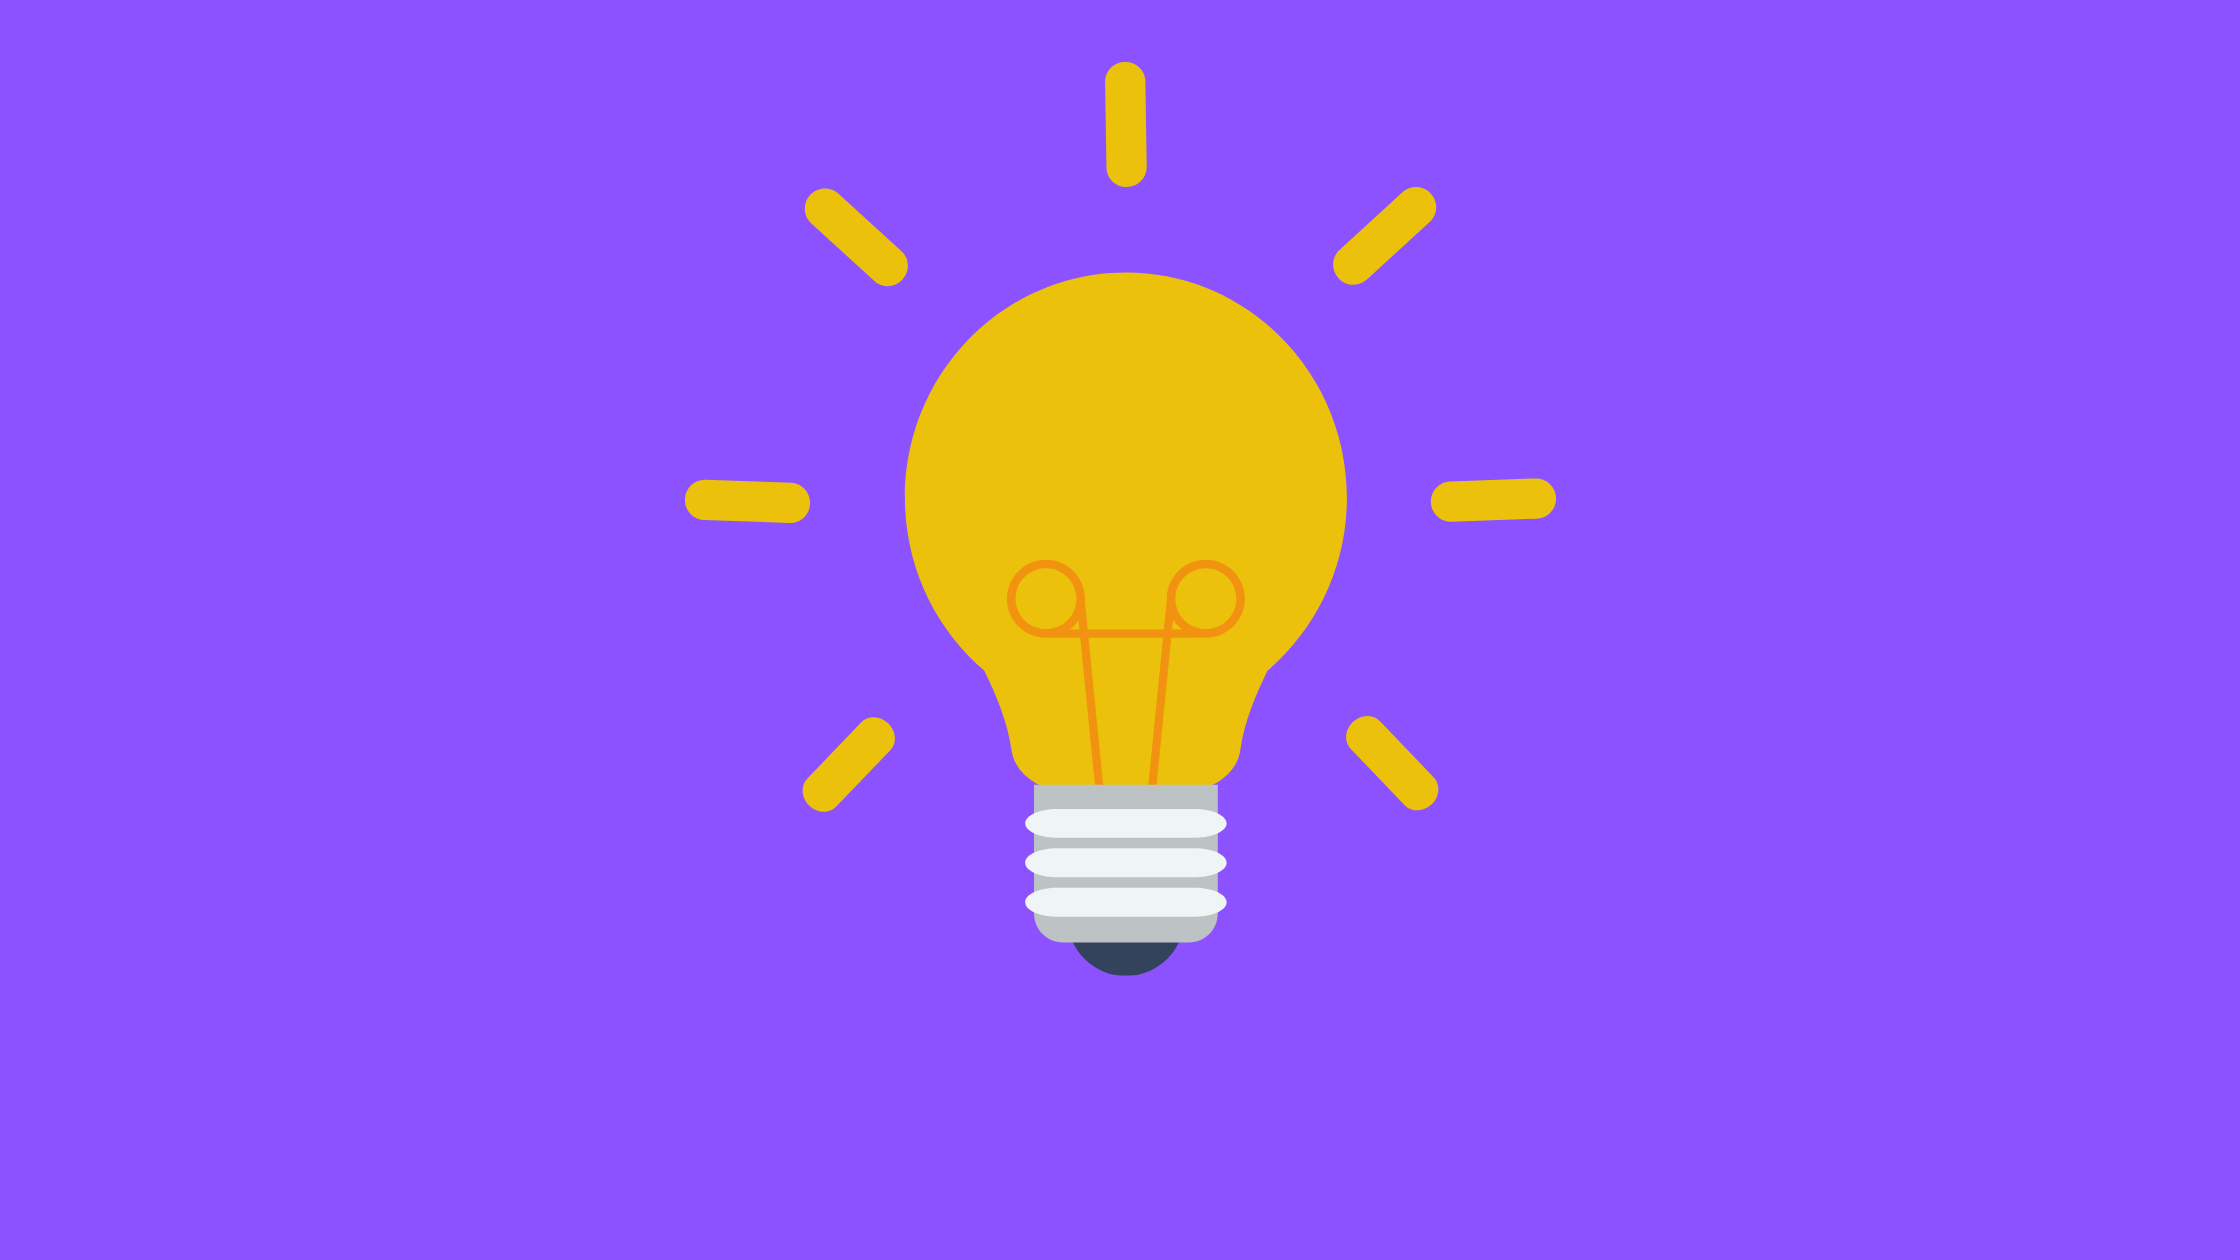 Illustration of a bright yellow light bulb